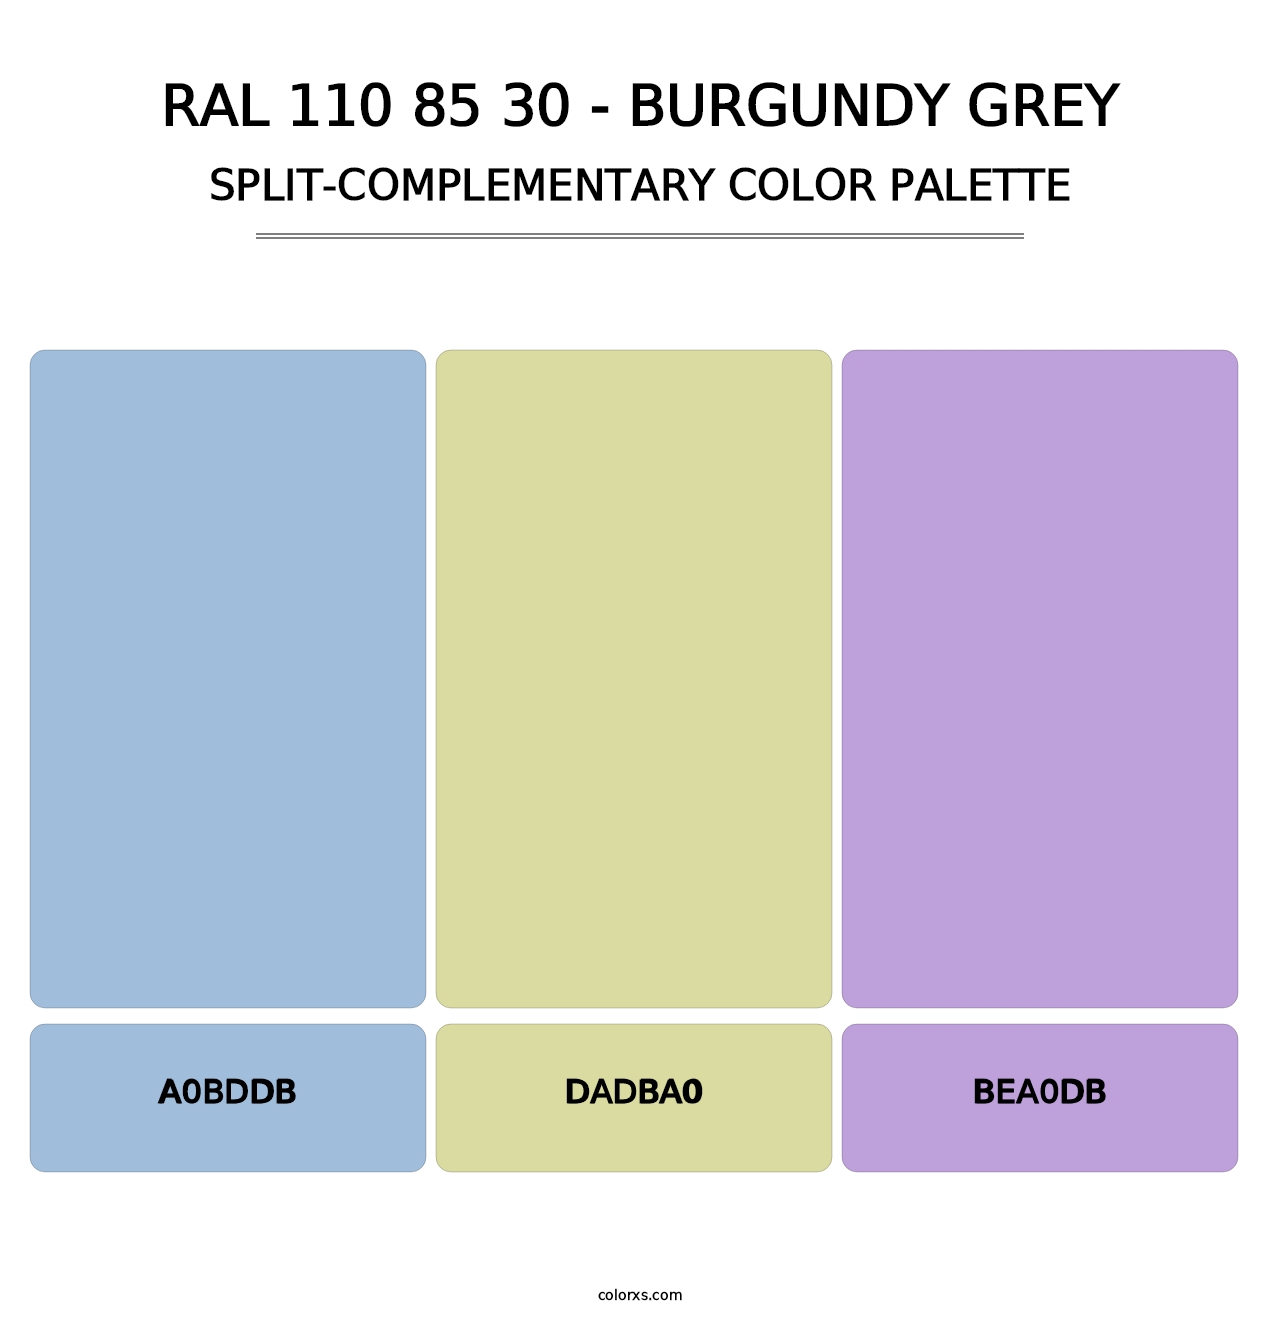 RAL 110 85 30 - Burgundy Grey - Split-Complementary Color Palette